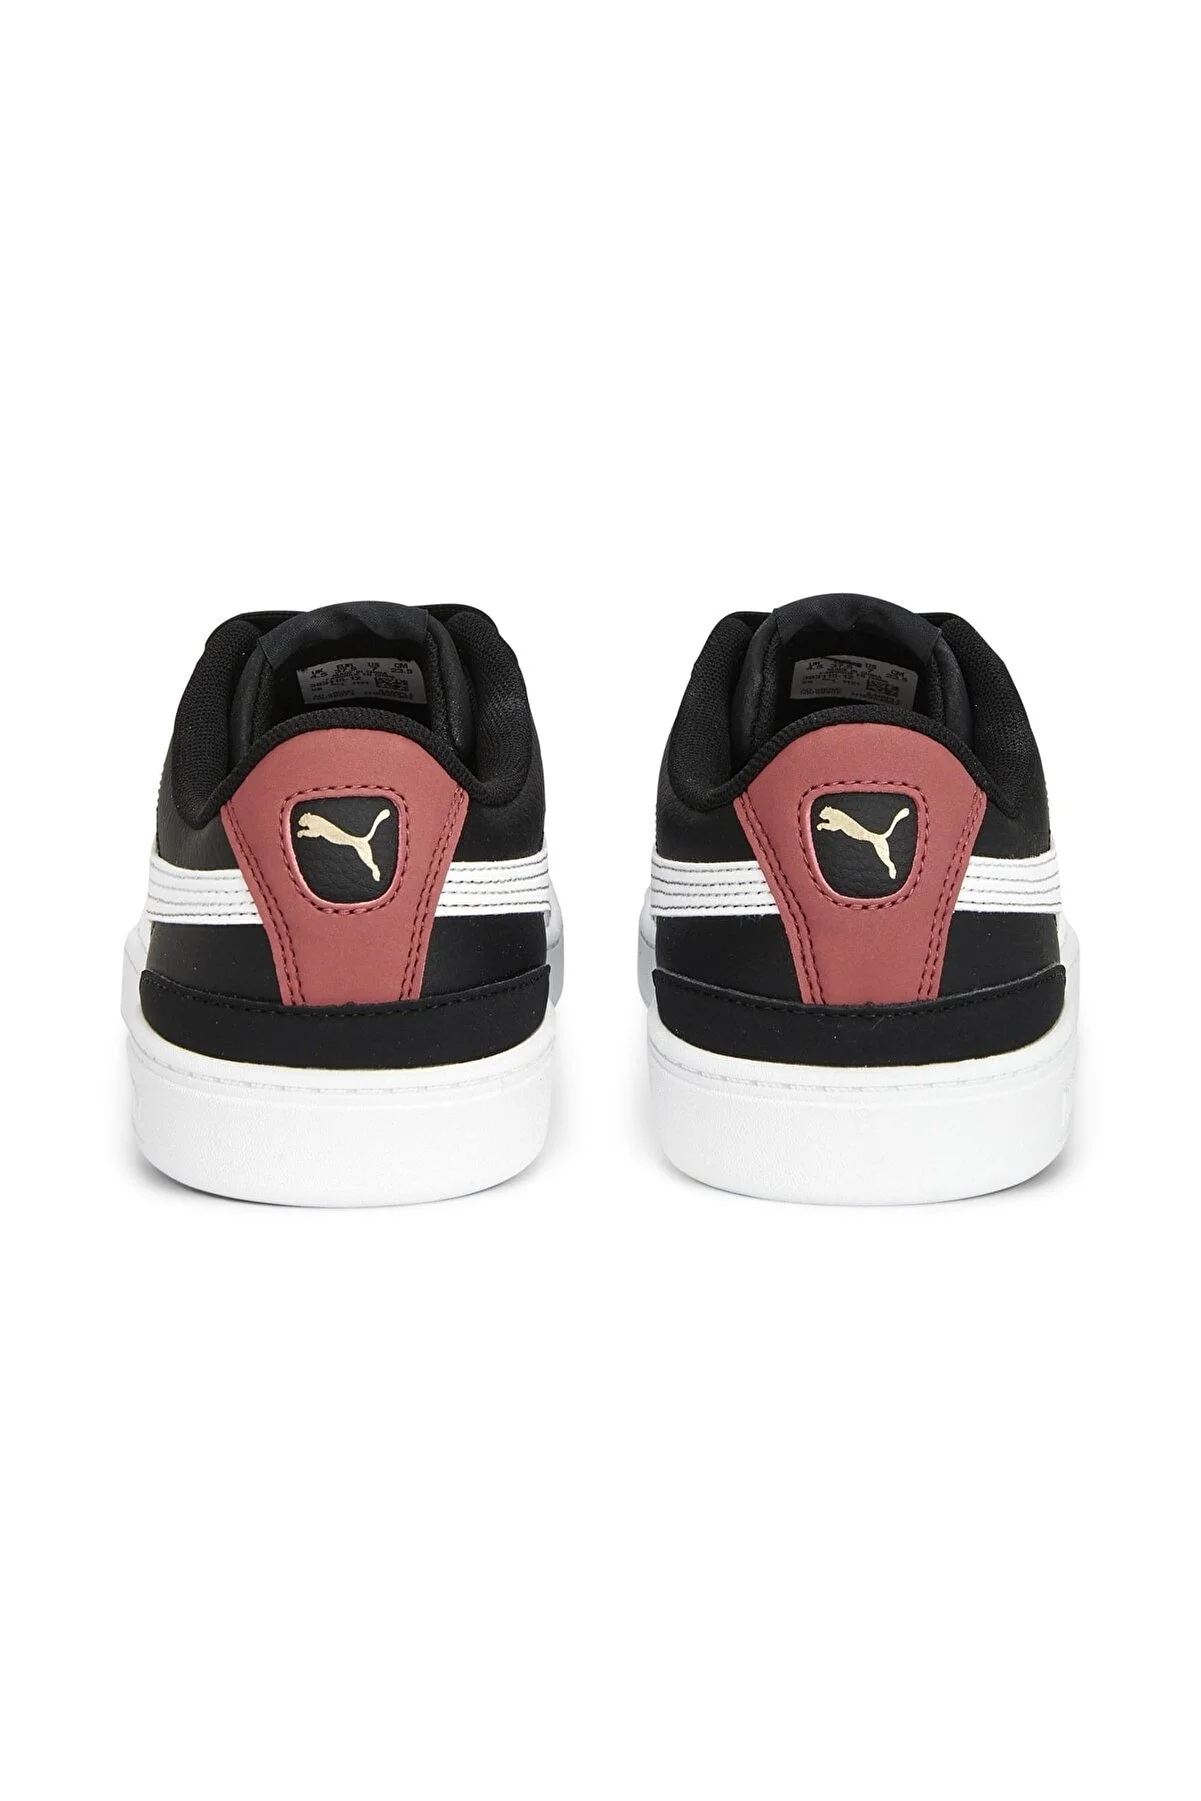 Vikky v3 Lthr Kadın Sneaker 383115-Siyah